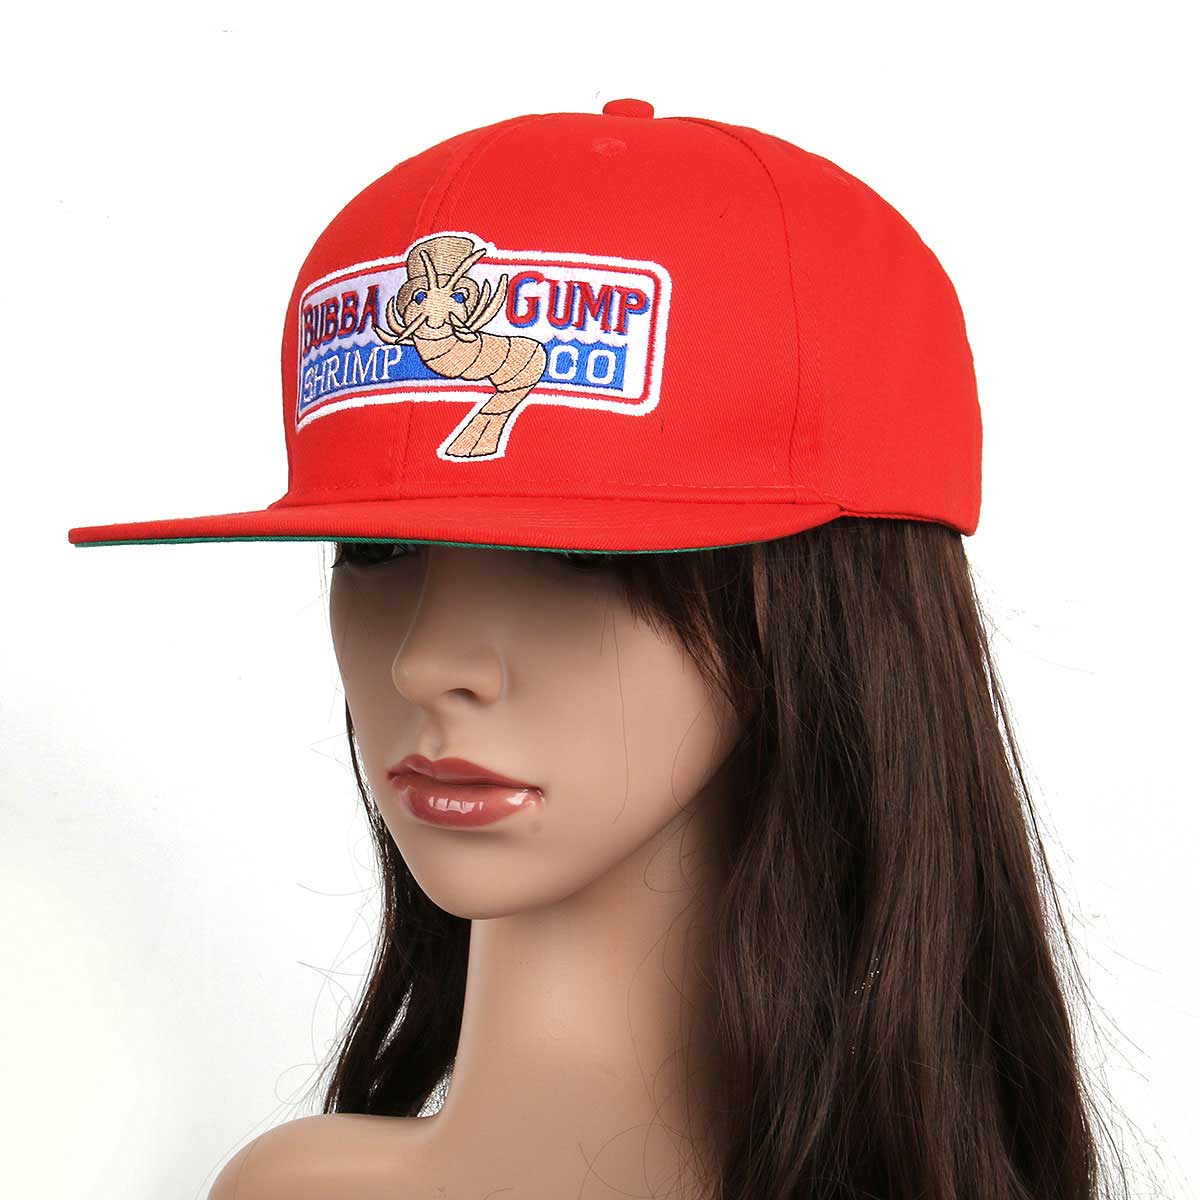 Takerlama 1994 Bubba Gump Shrimp CO. Baseball Hat Forrest Gump Costume Cosplay Embroidered Snapback Cap Men&Women Summer Cap